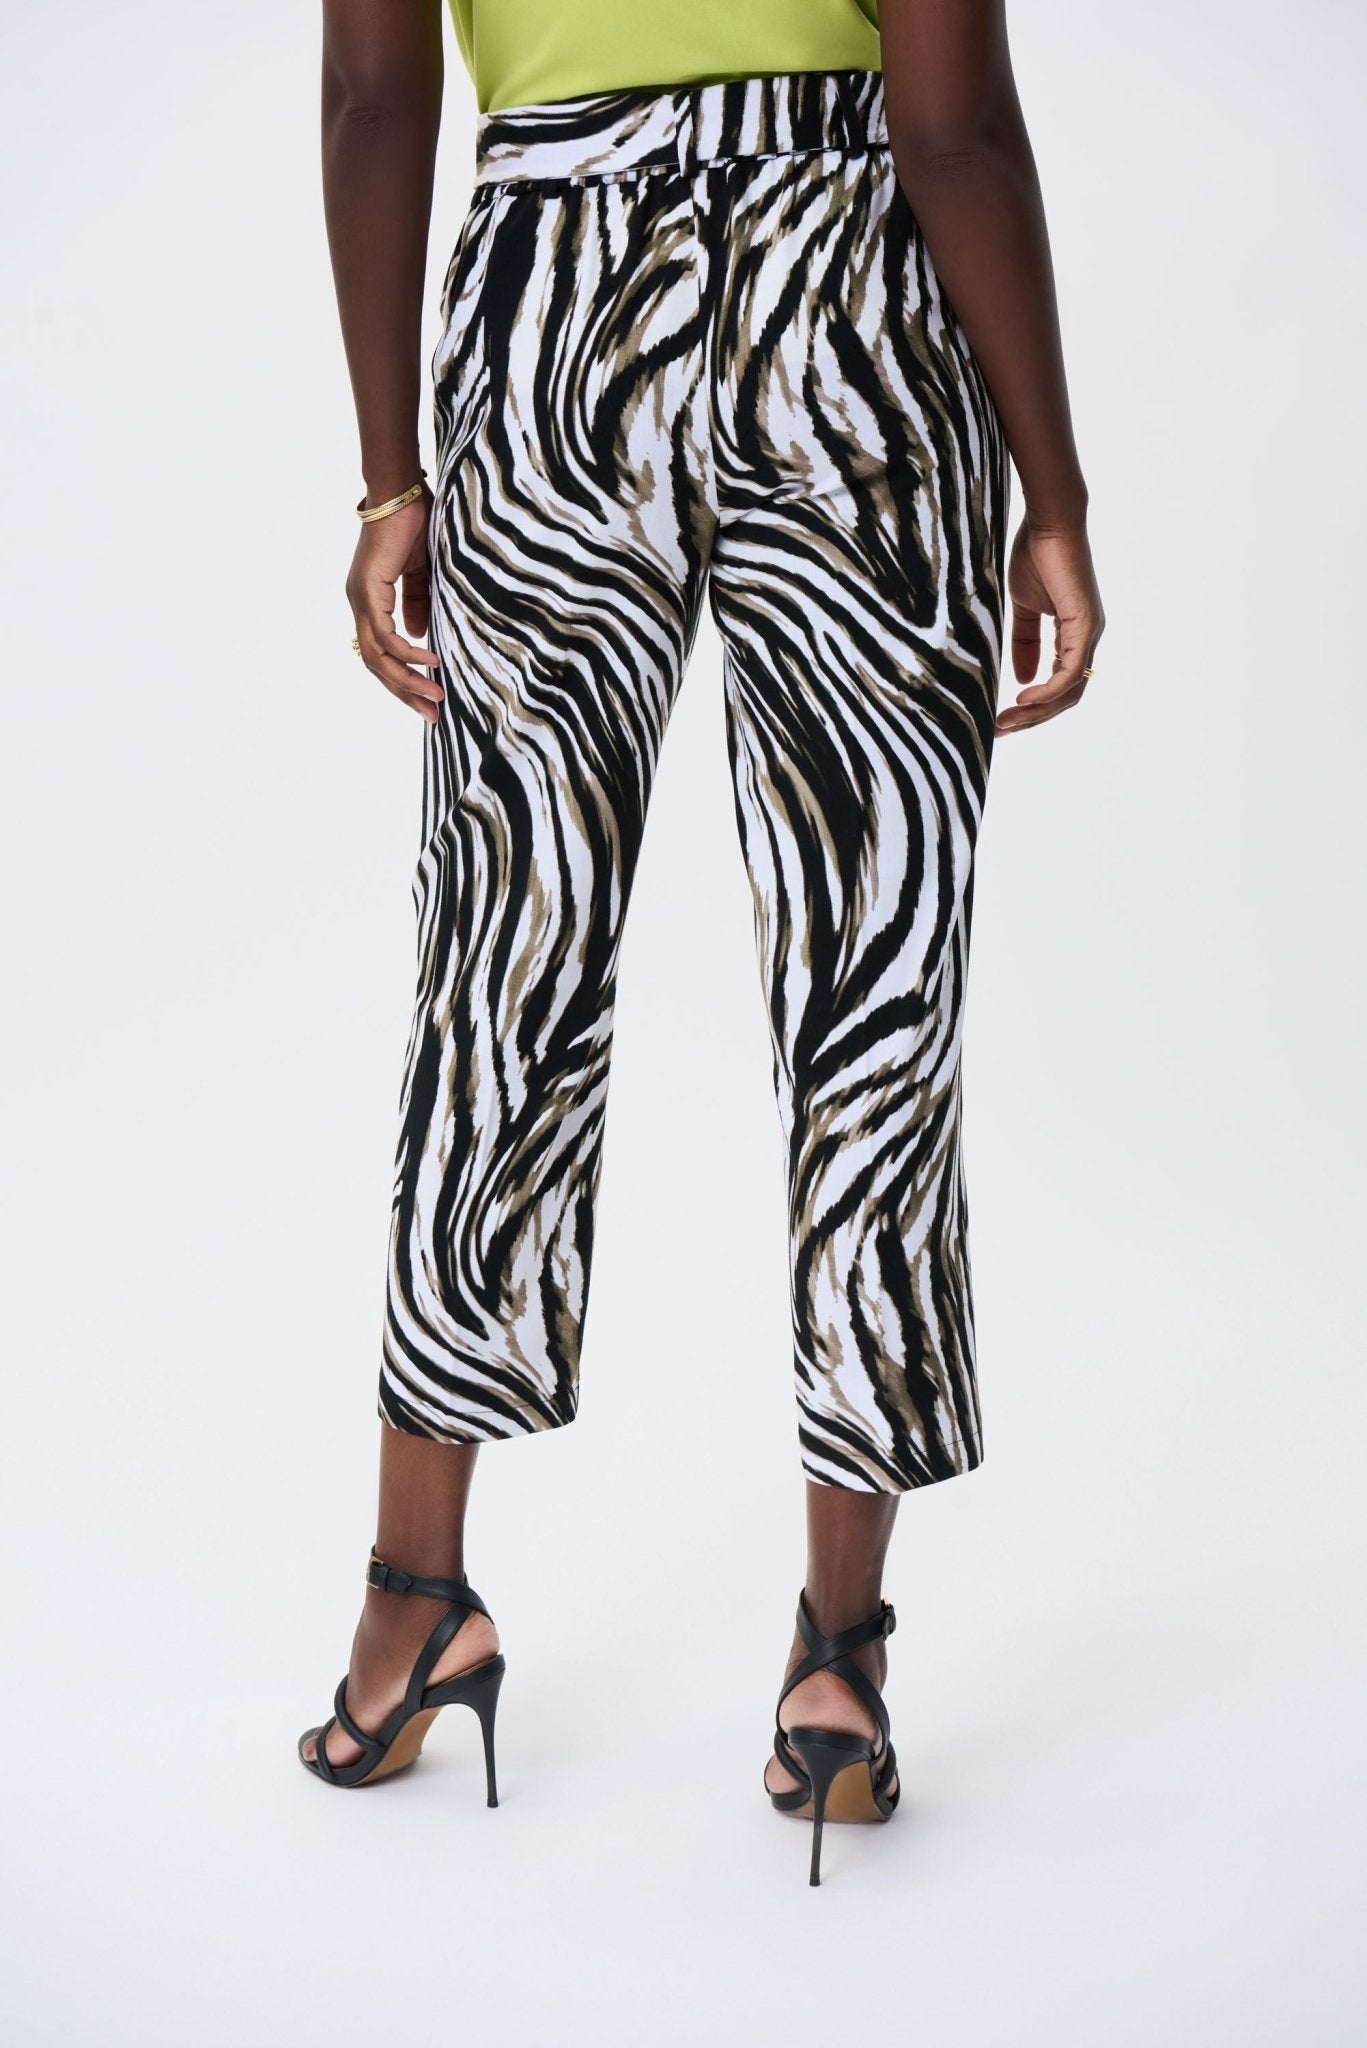 Shop Animal Print Wide Leg Pants Style 231116 | Vanilla/Multi - Joseph Ribkoff